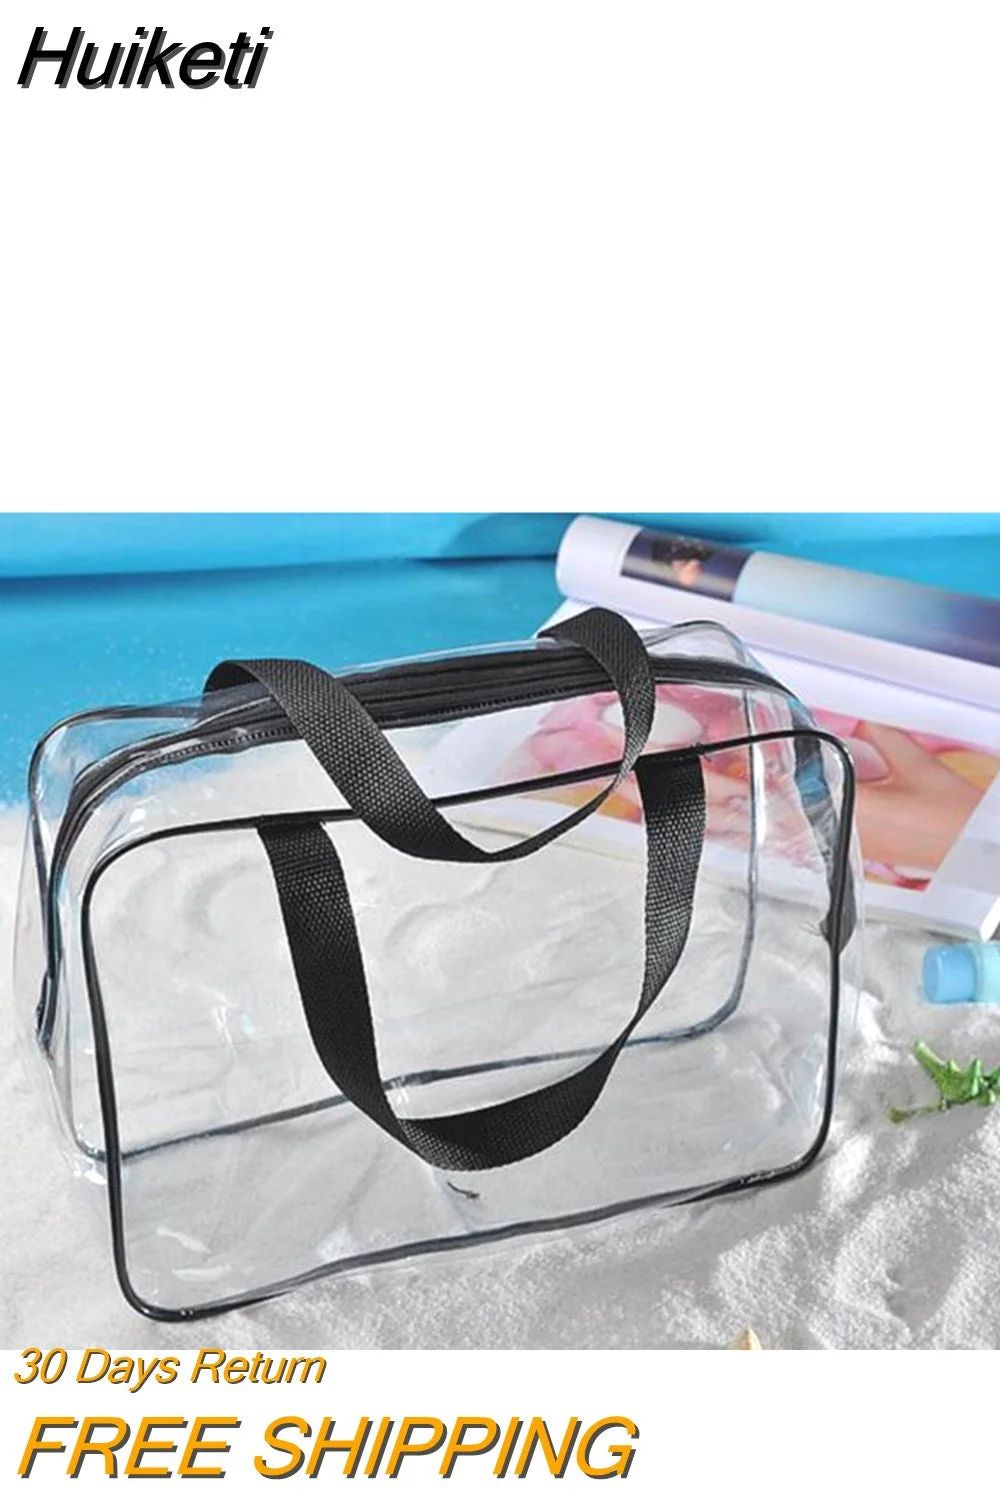 Huiketi Transparent Bags Plastic PVC Bathroom Waterproof Travel Cosmetic Bag Zipper Make Up Toiletry Bags Makeup Organizer Case